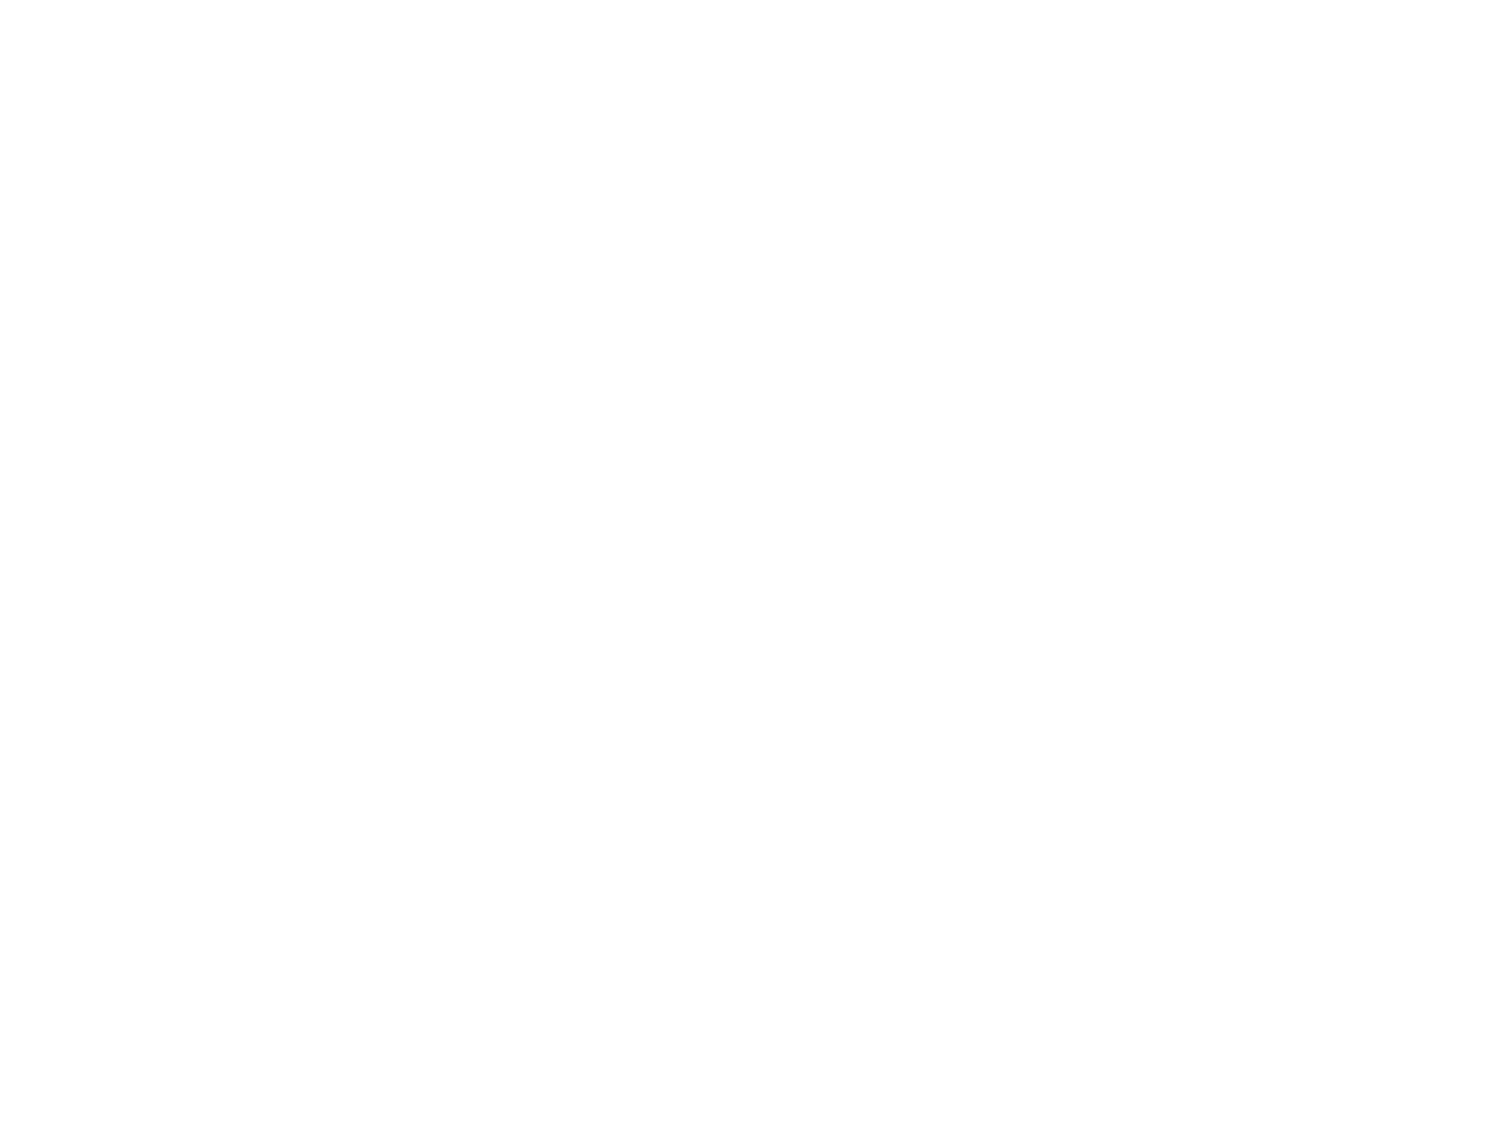 Gene Yoon